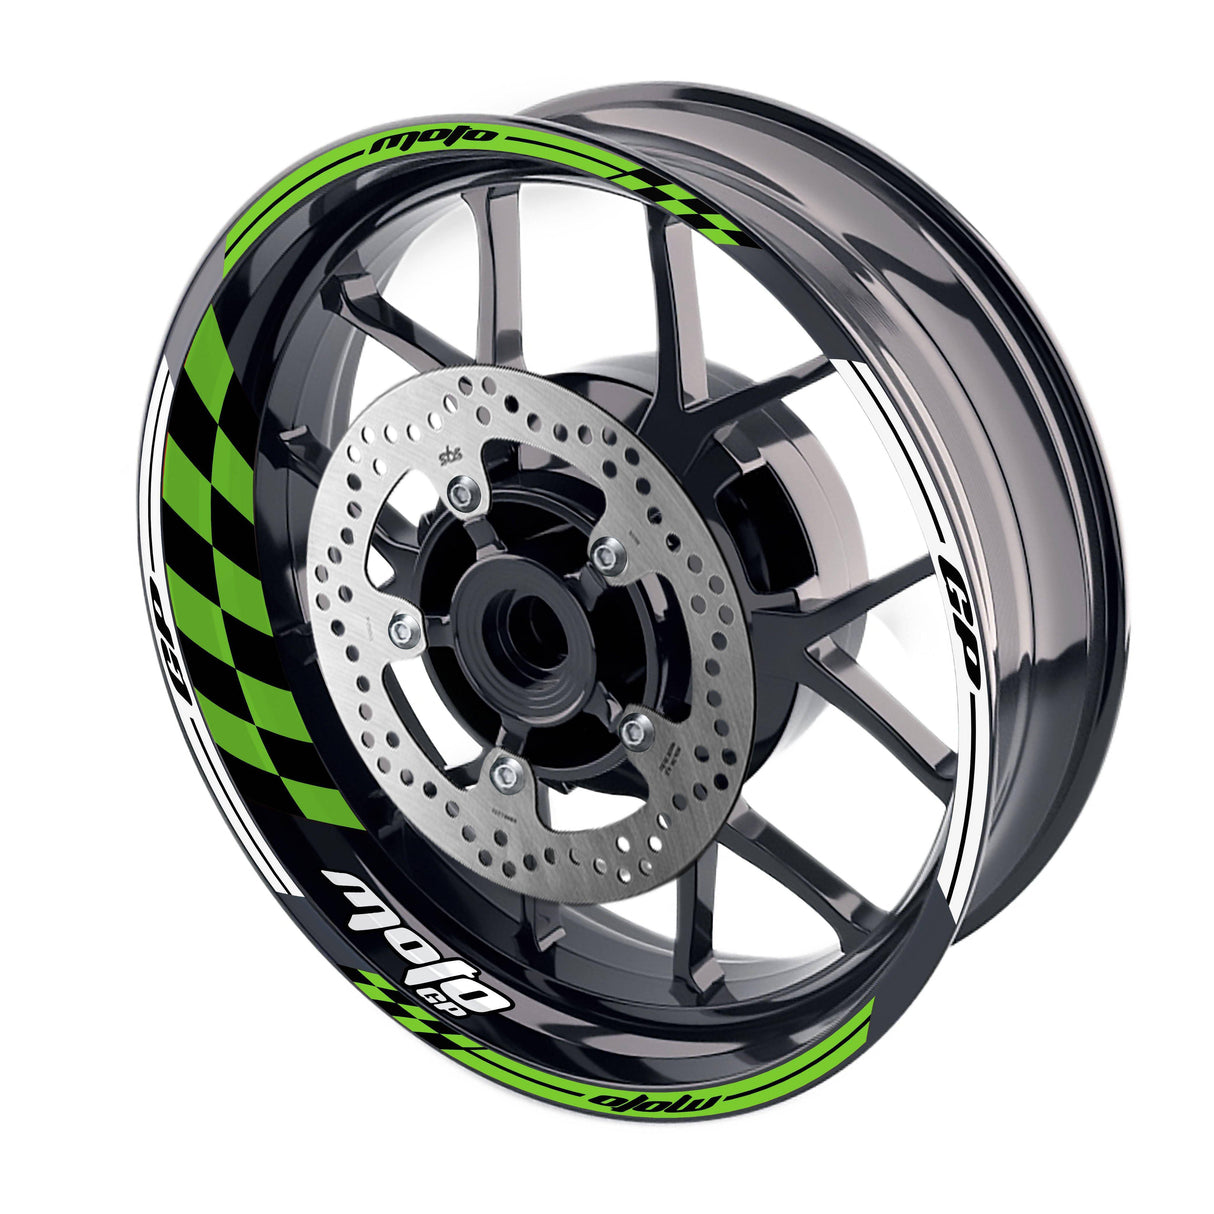 For Kawasaki Z400 Logo MOTO 17 inch Rim Wheel Stickers GP01 Racing Check.